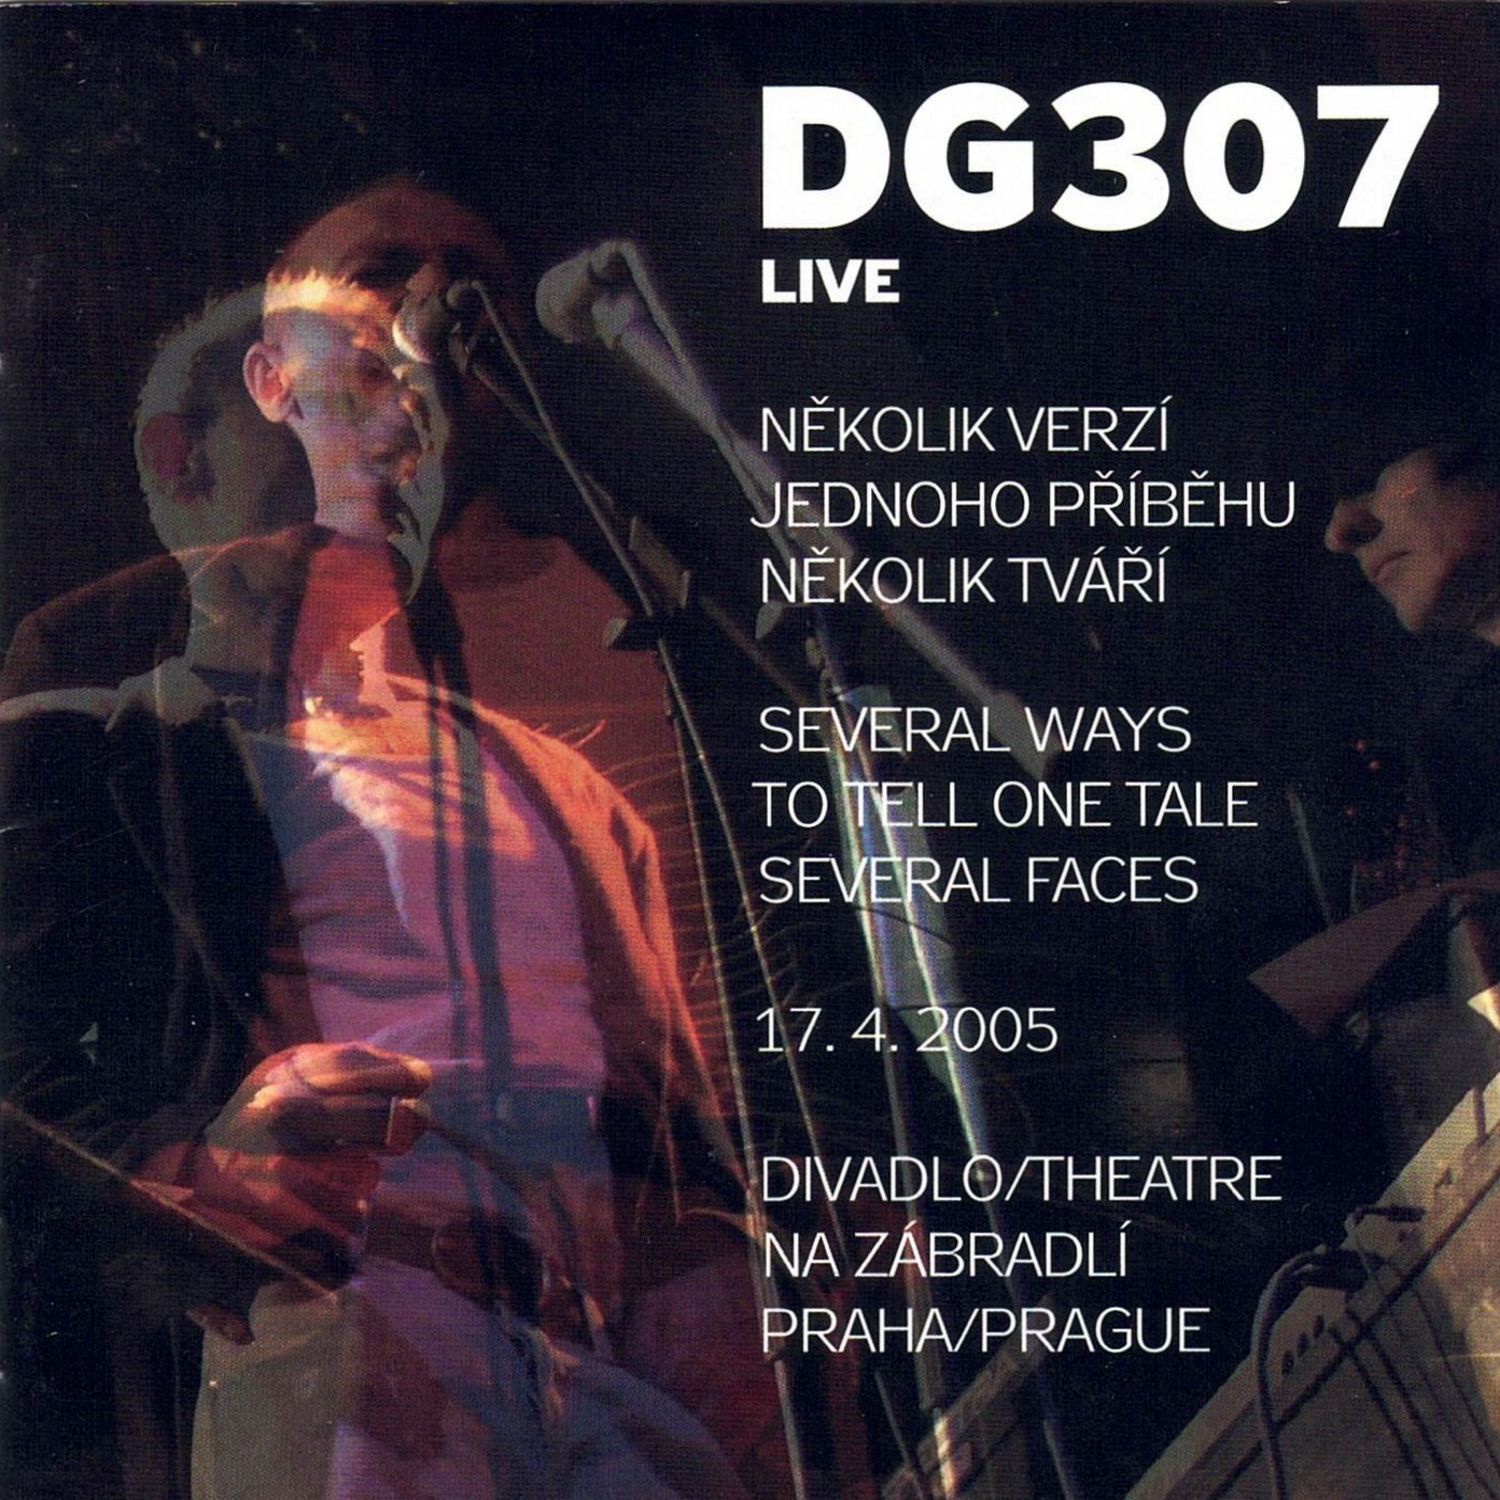 CD Shop - DG 307 LIVE (DIVADLO NA ZABRADLI 17.4.2005)